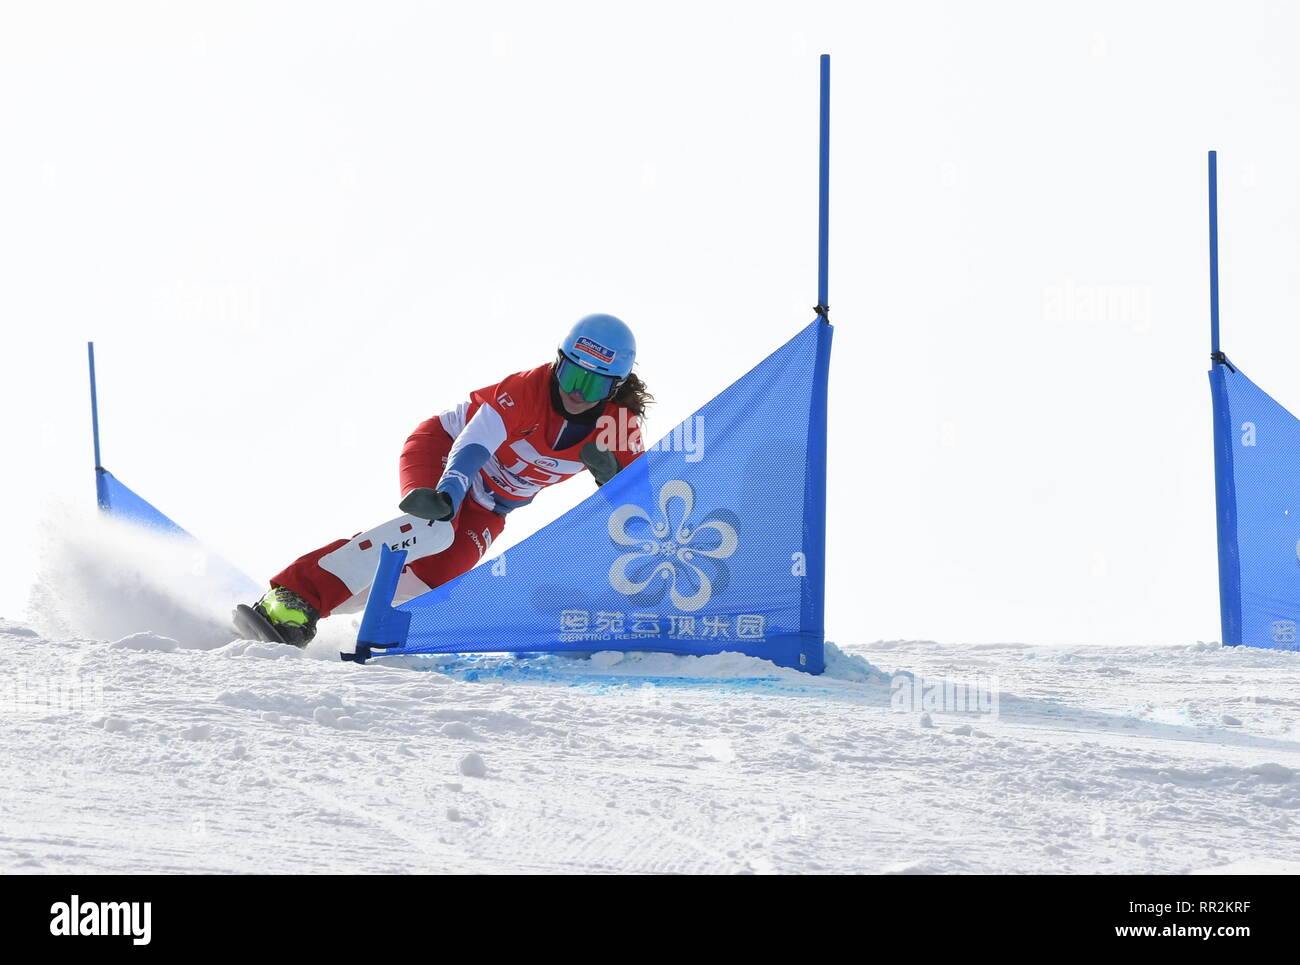 Zhangjiakou. 24th Feb, 2019. Patrizia Kummer of Switzerland competes during the women's Parallel Slalom final of FIS Snowboard World Cup 2018-2019 in Zhangjiakou of north China's Hebei Province, on Feb. 24, 2019. Credit: Zhu Xudong/Xinhua/Alamy Live News Stock Photo